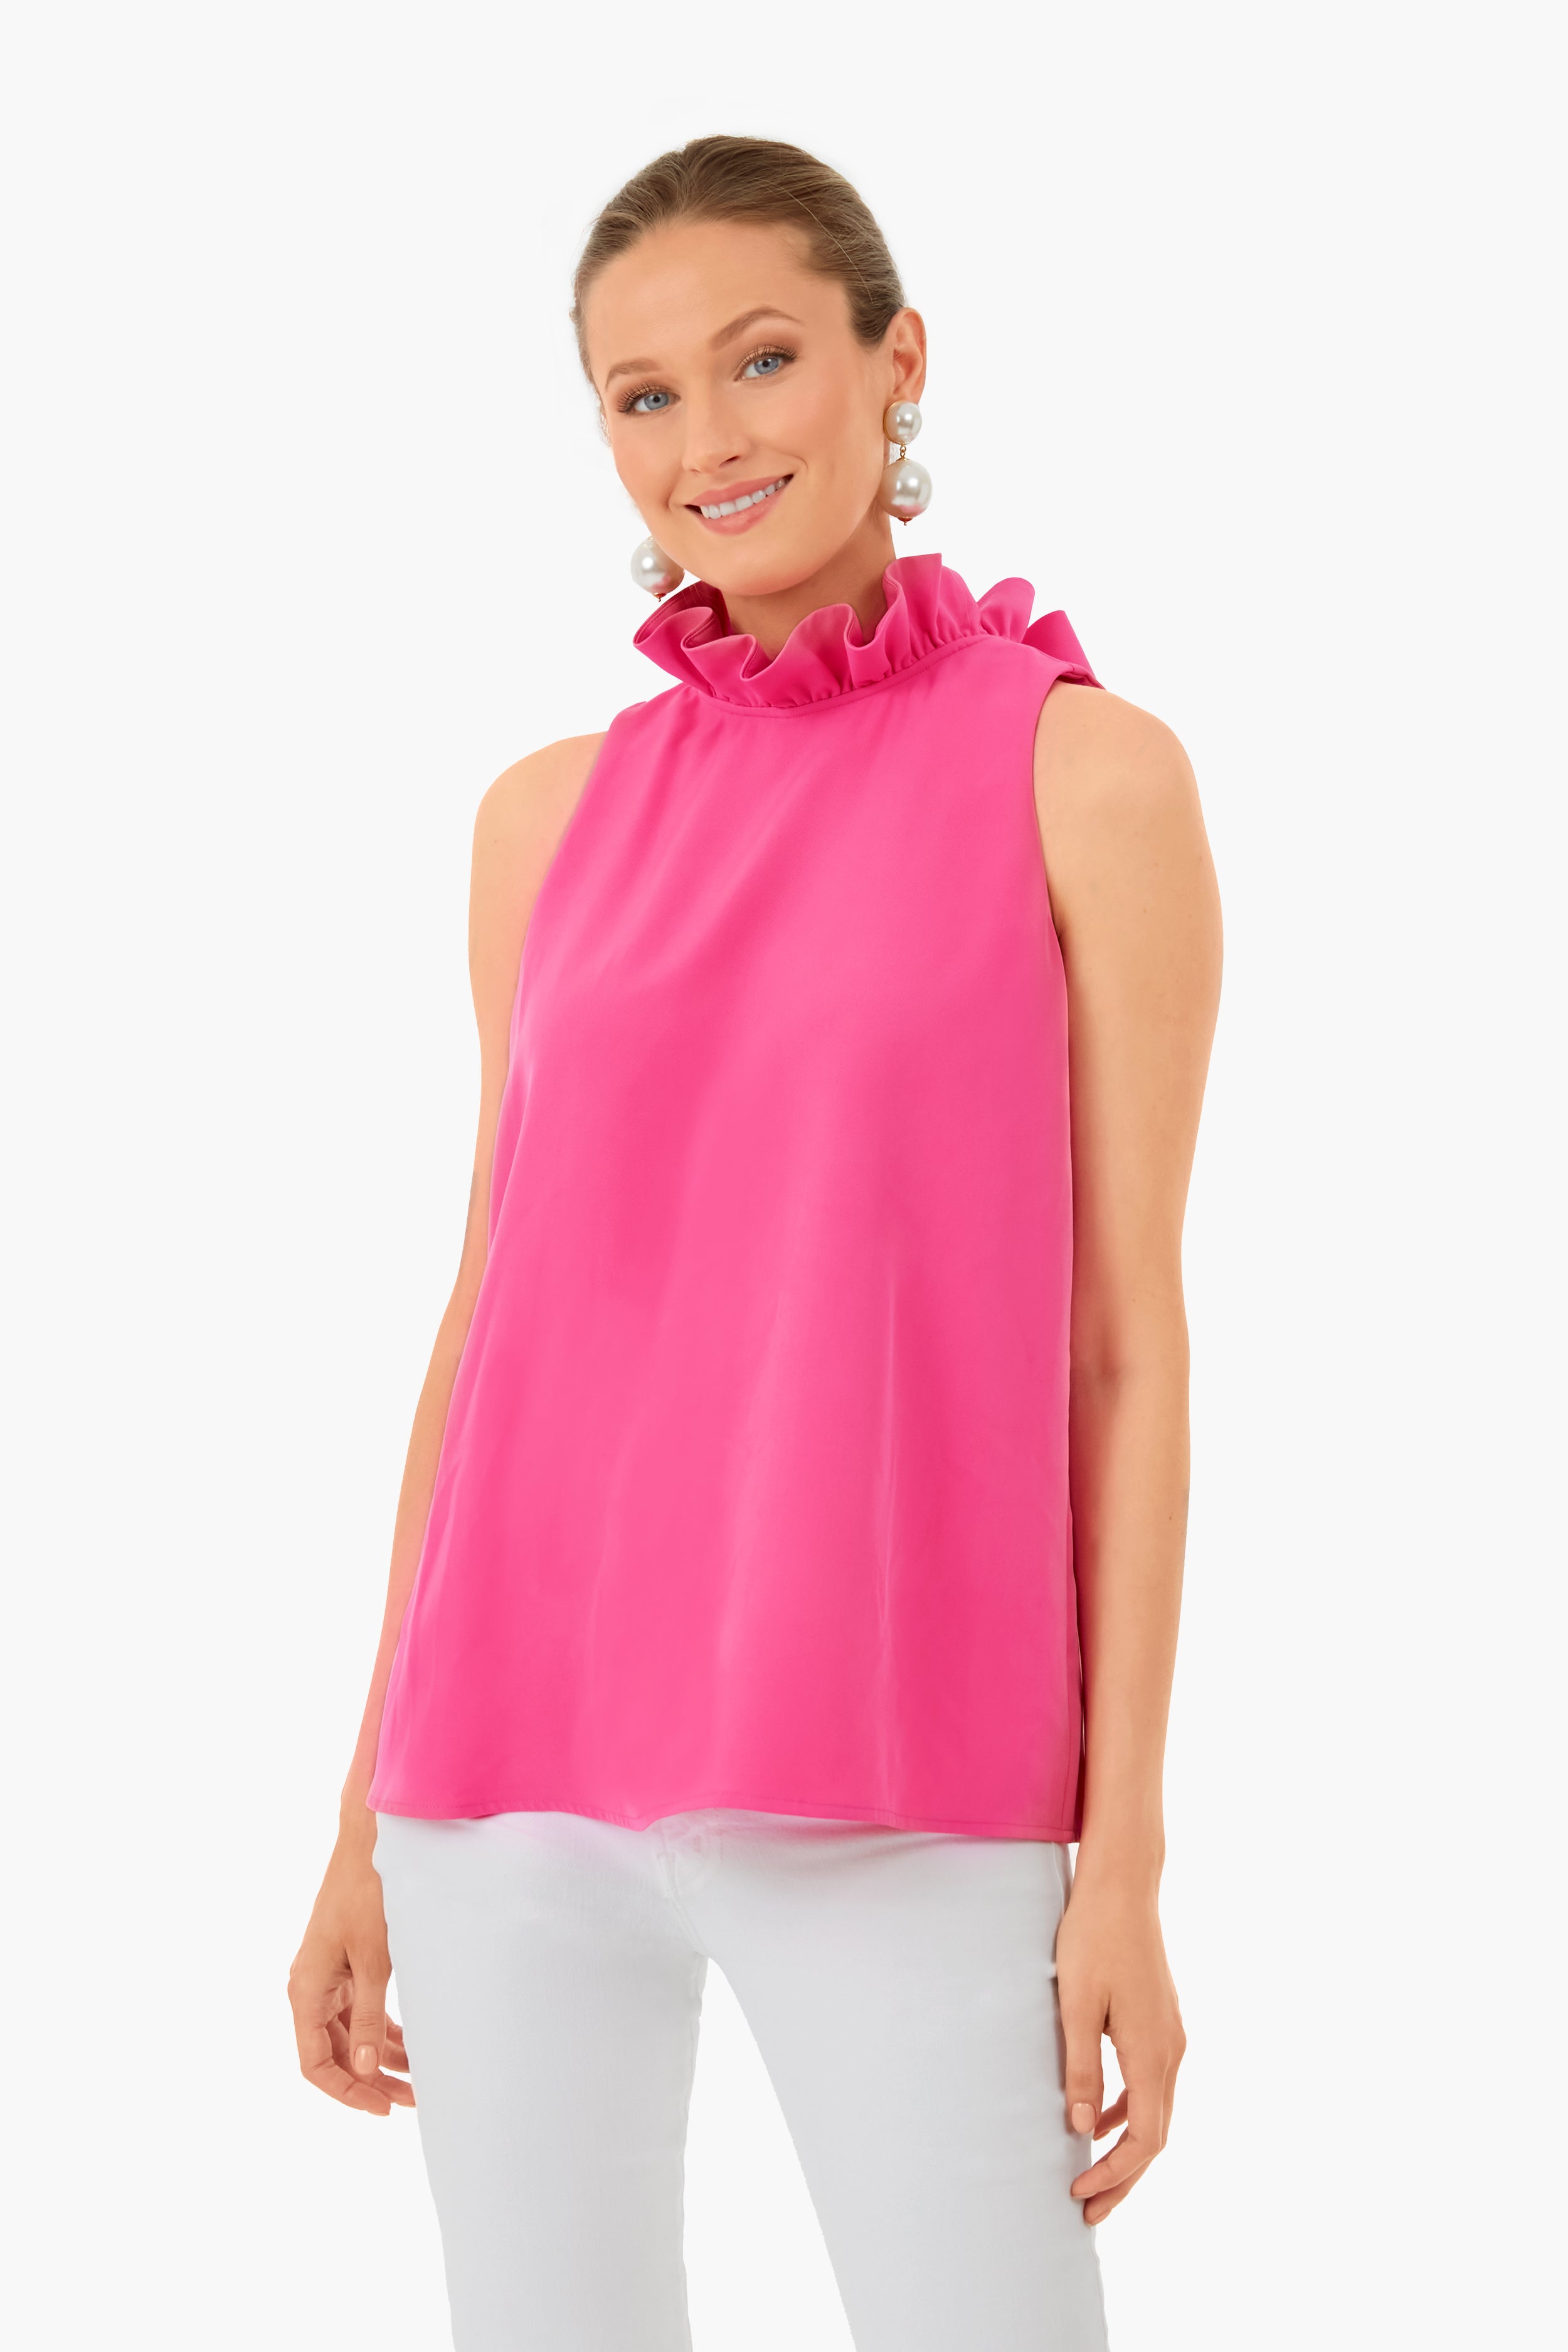 Hot Pink Lycra Plain Fitted Shirt :: Show Diva Designs